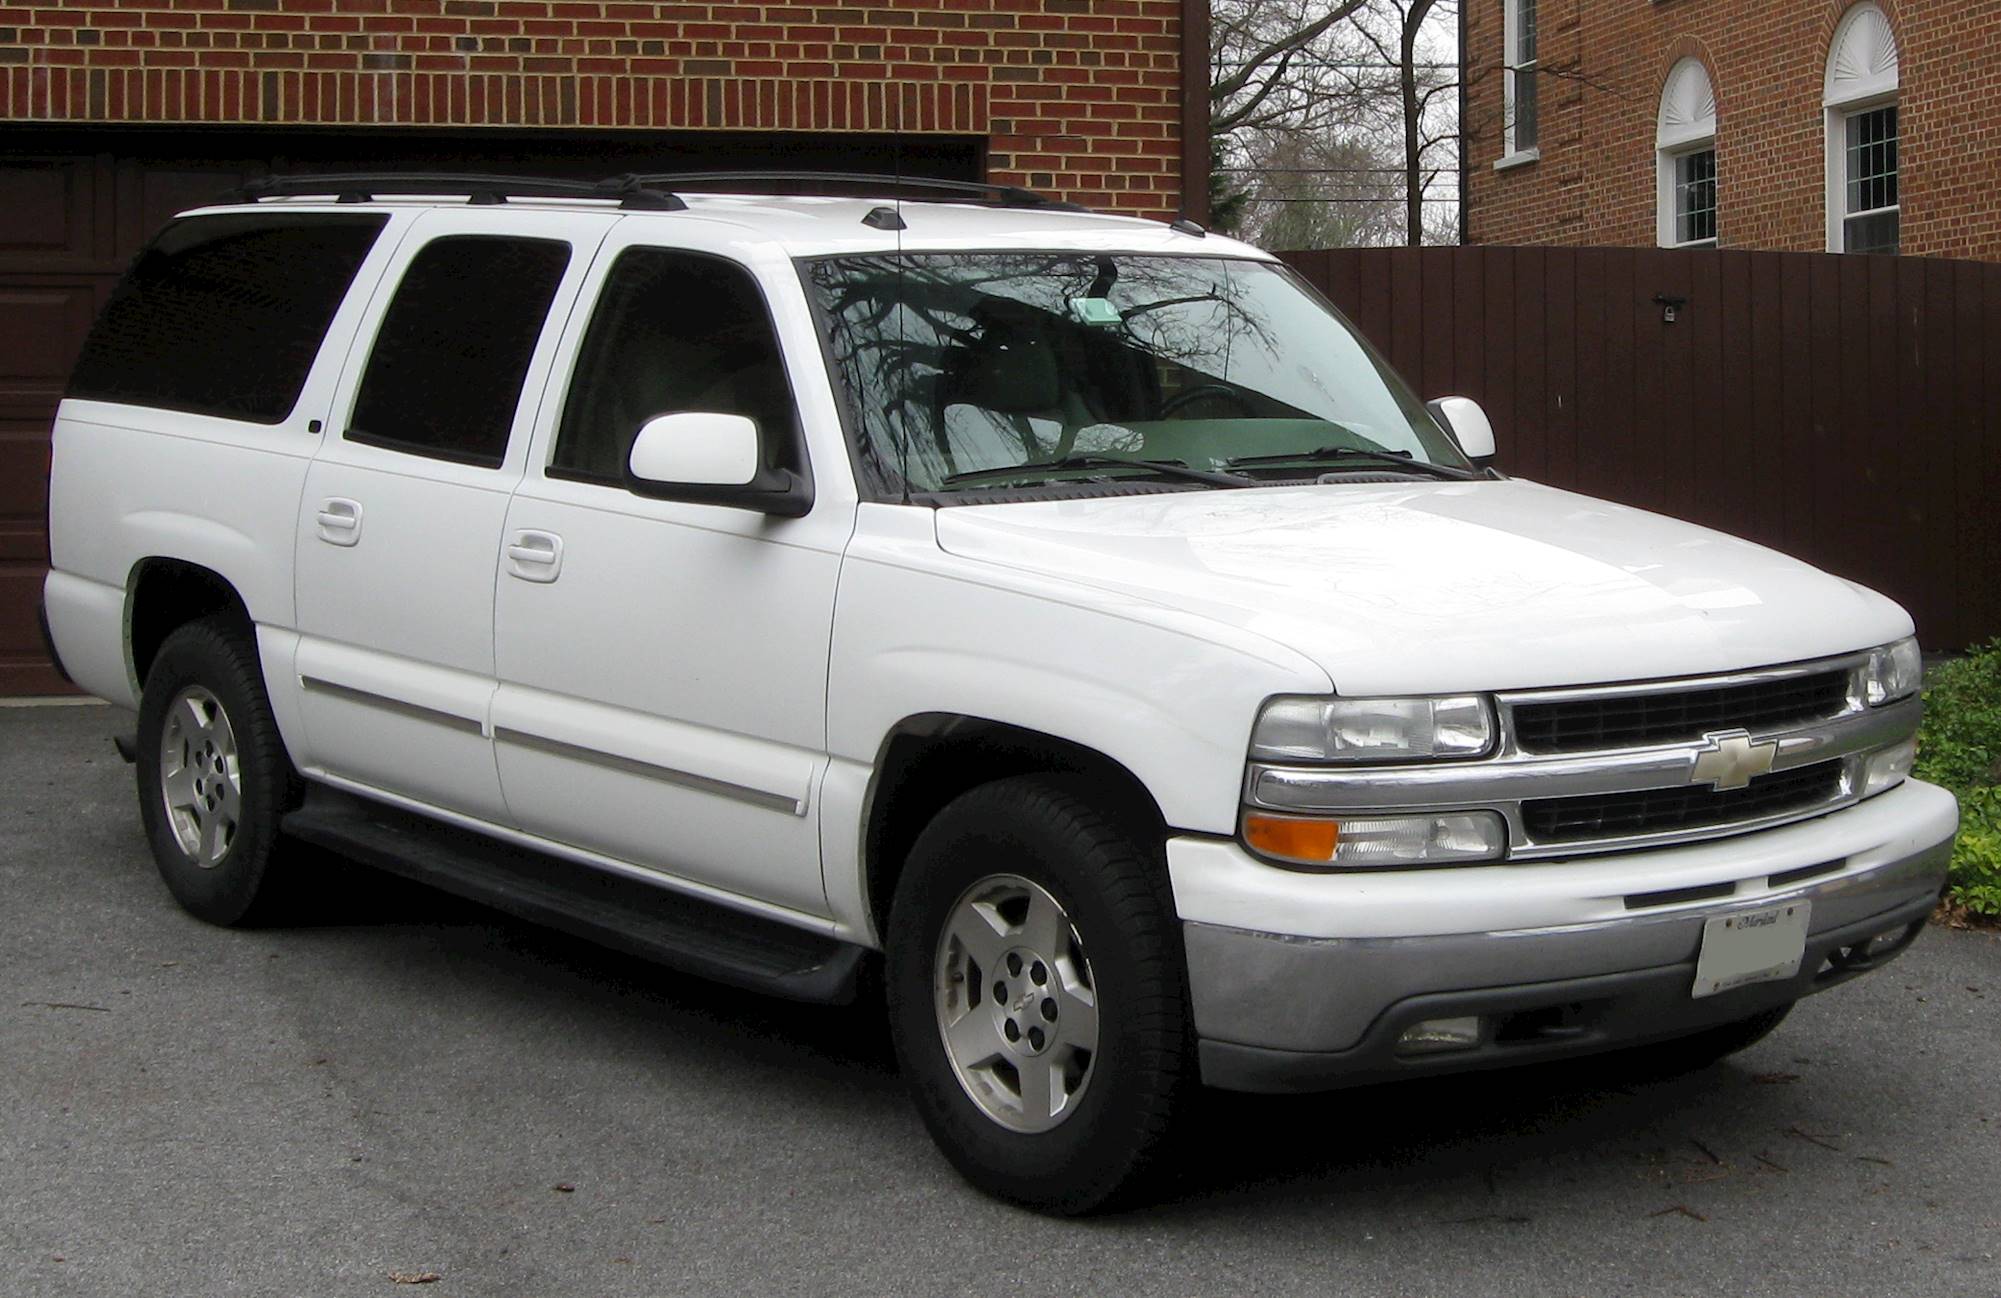 2006 Chevy Suburban 1500 Towing Capacity